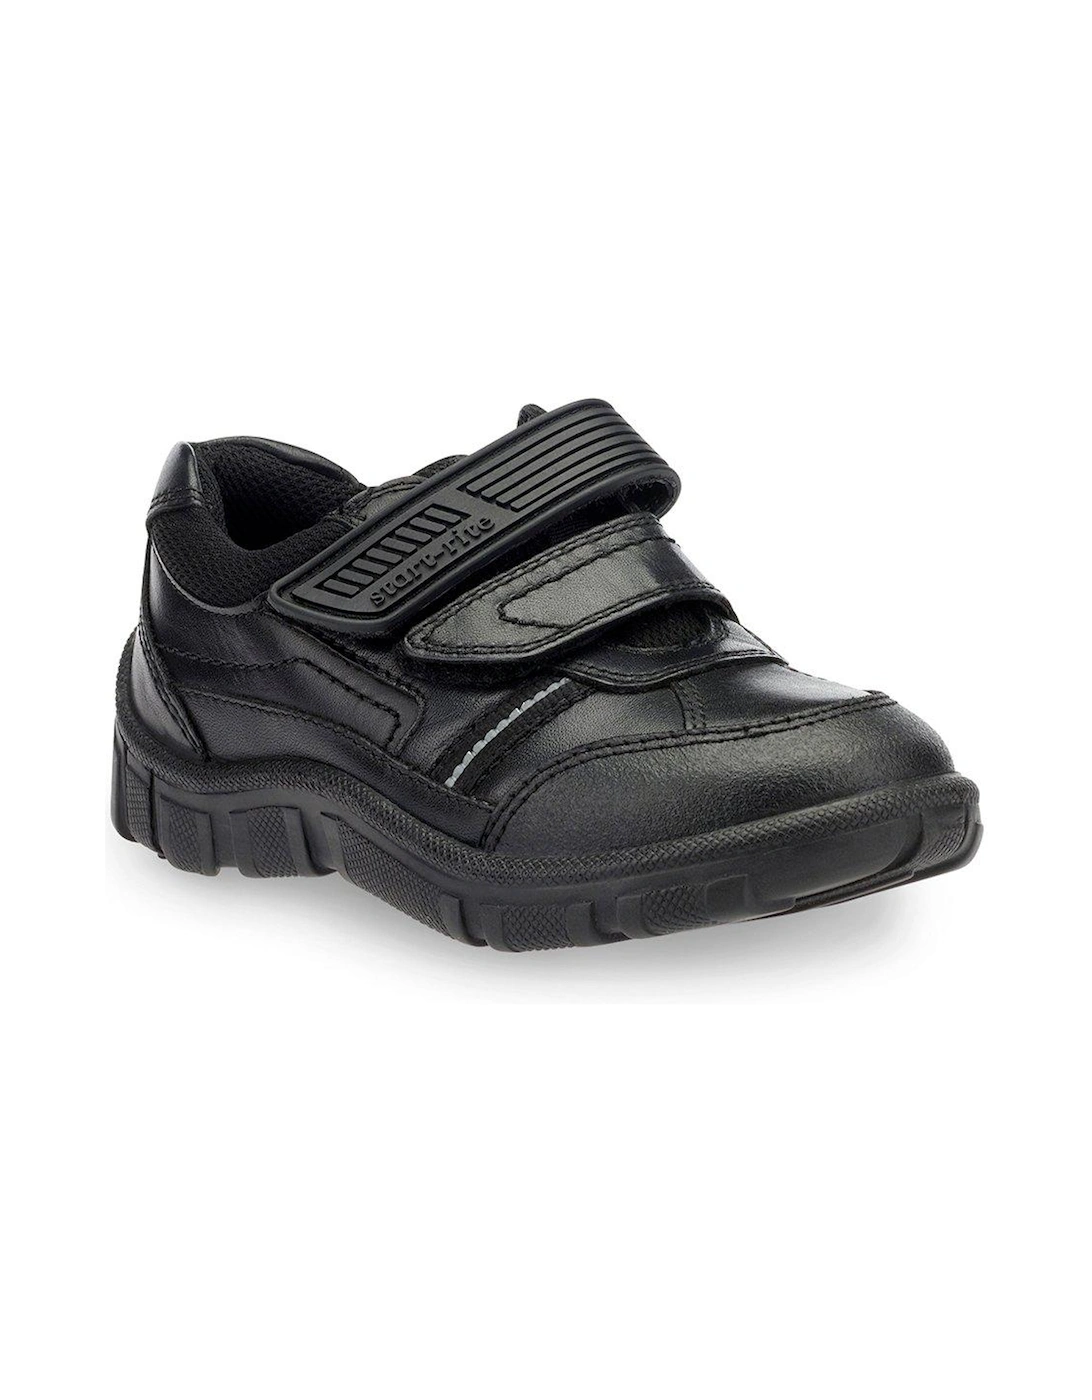 Luke Leather Double Riptape Football Boys School Shoes - Black, 2 of 1